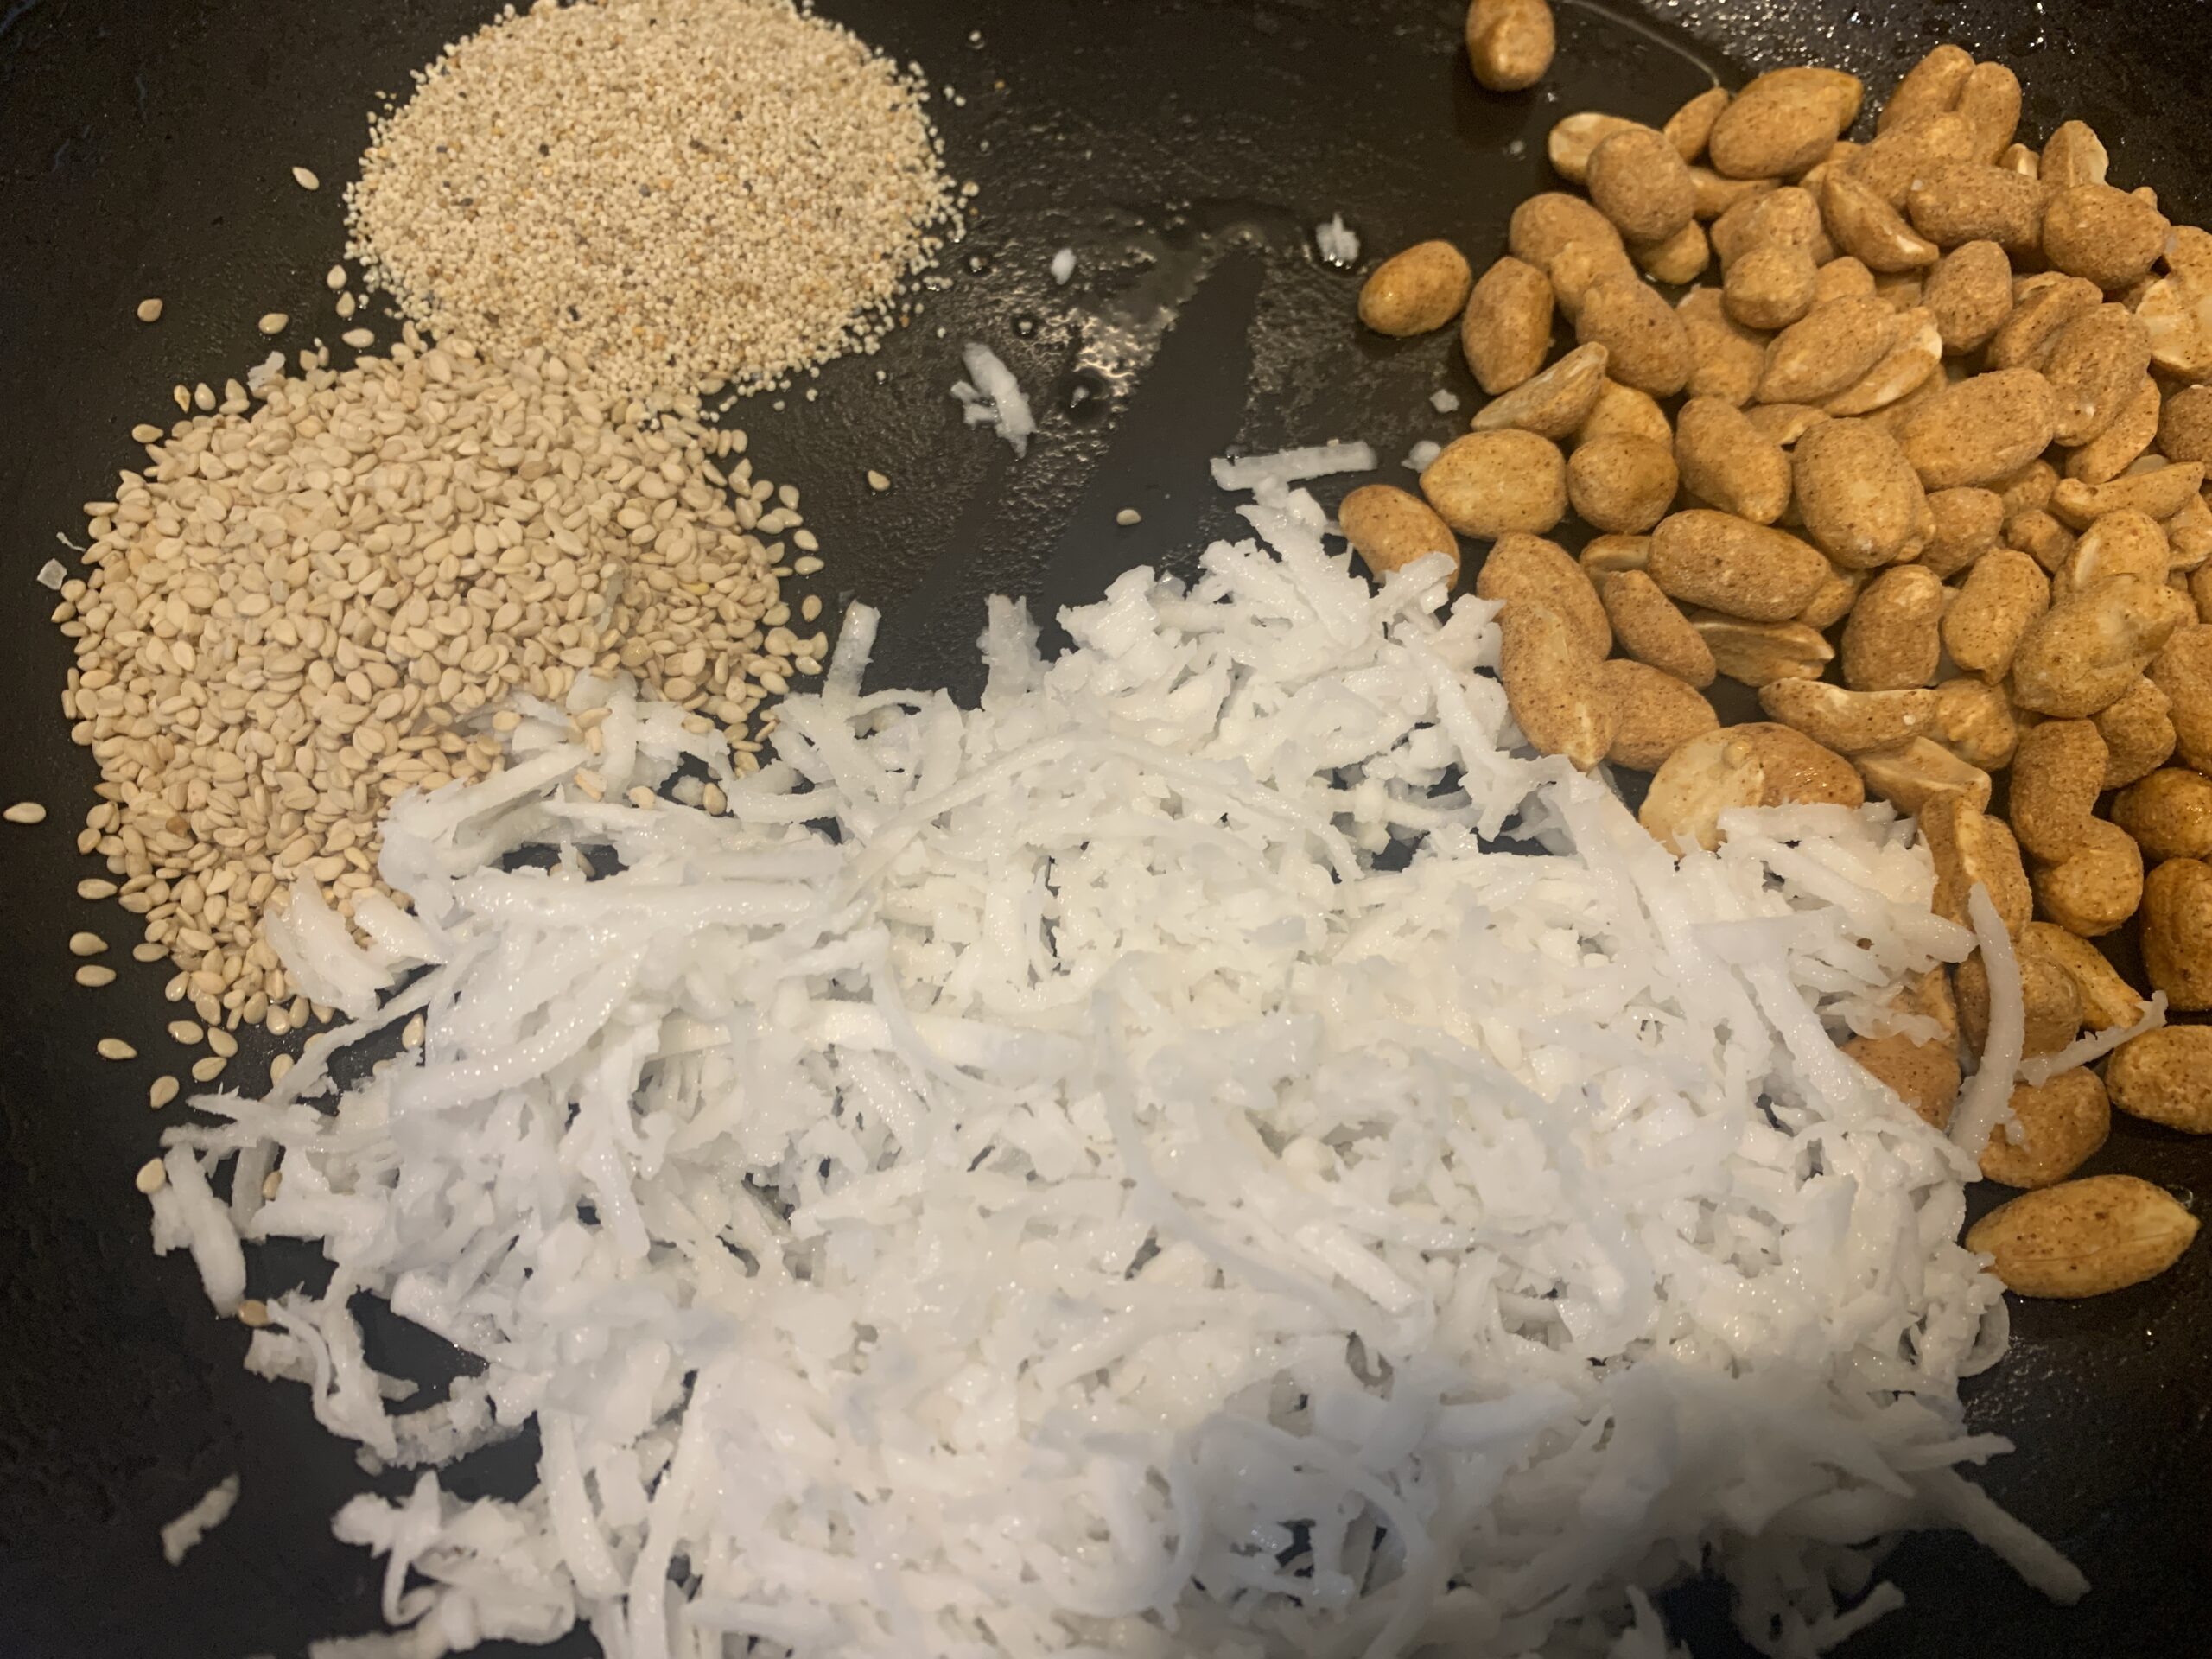 Hyderabadi Mirchi ka Salan Recipe